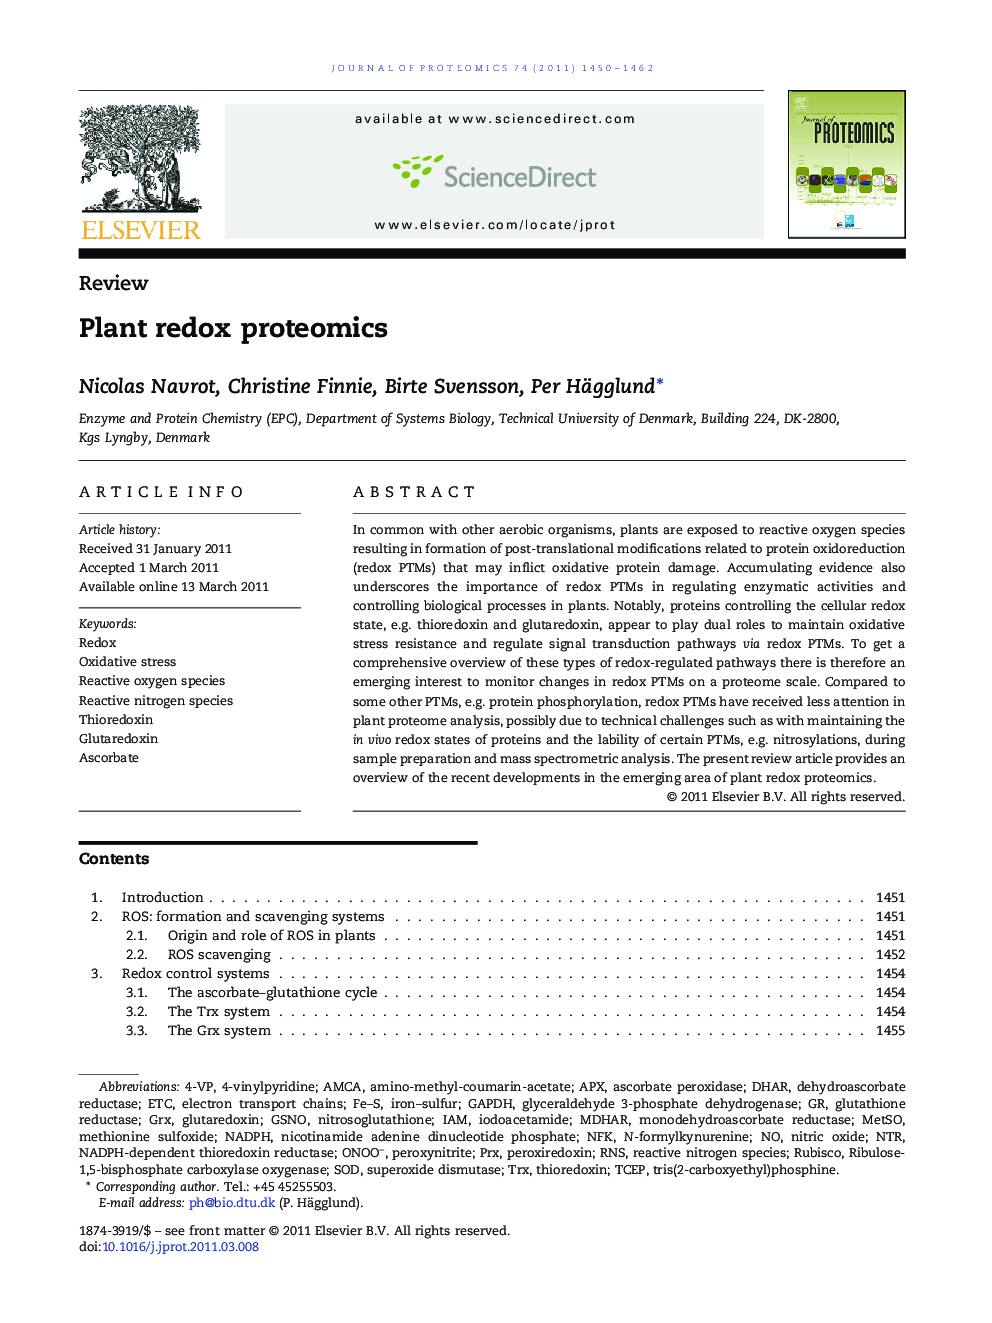 Plant redox proteomics